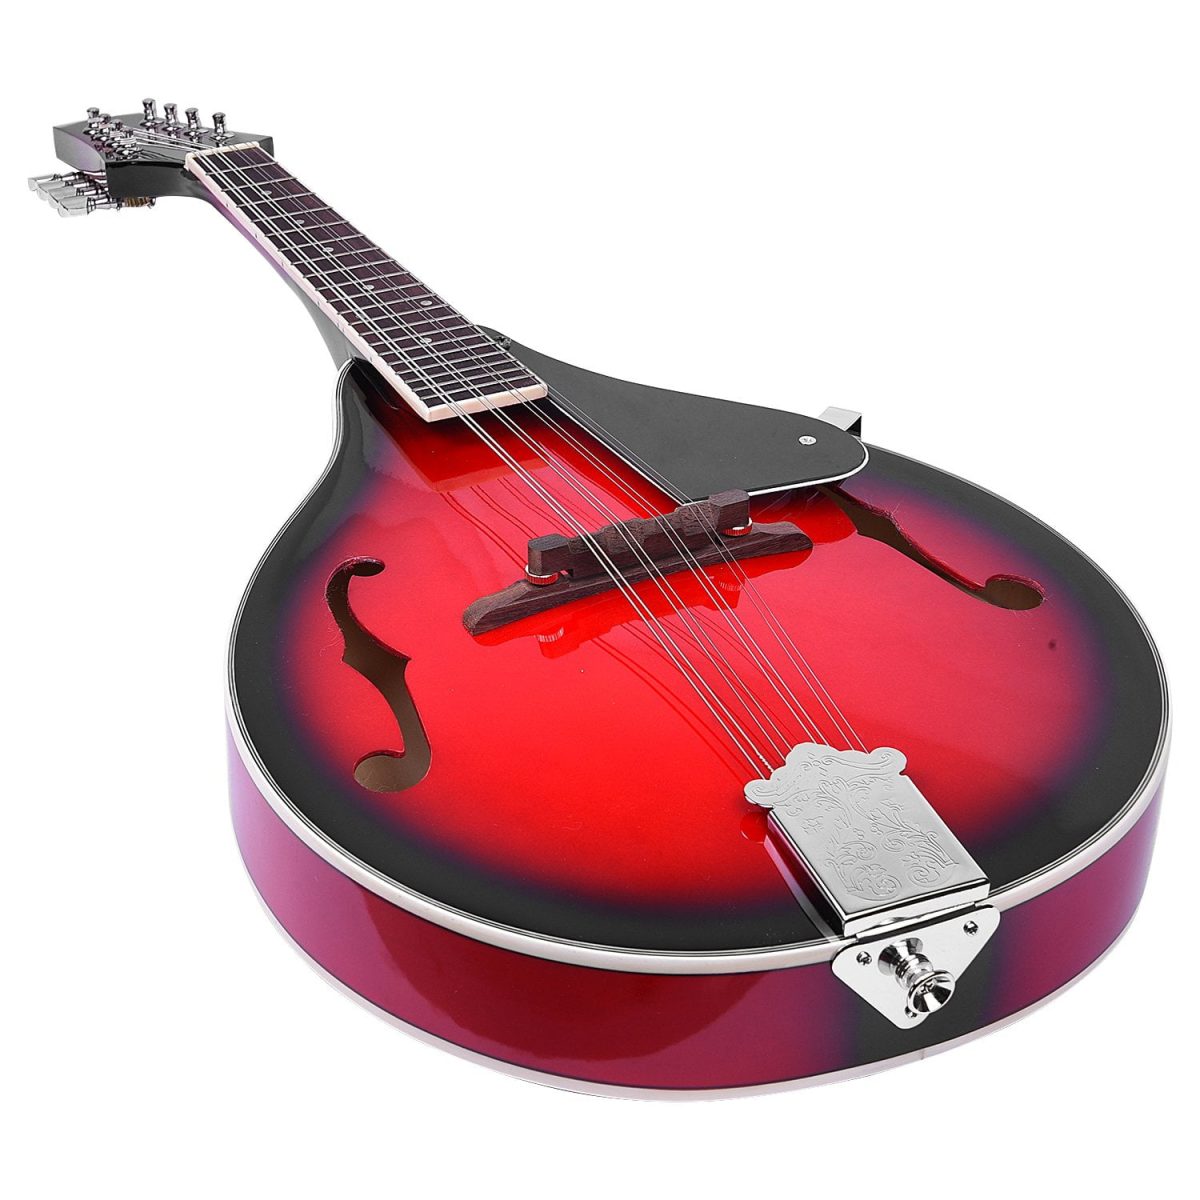 Kadence Acoustic Mandolin Red